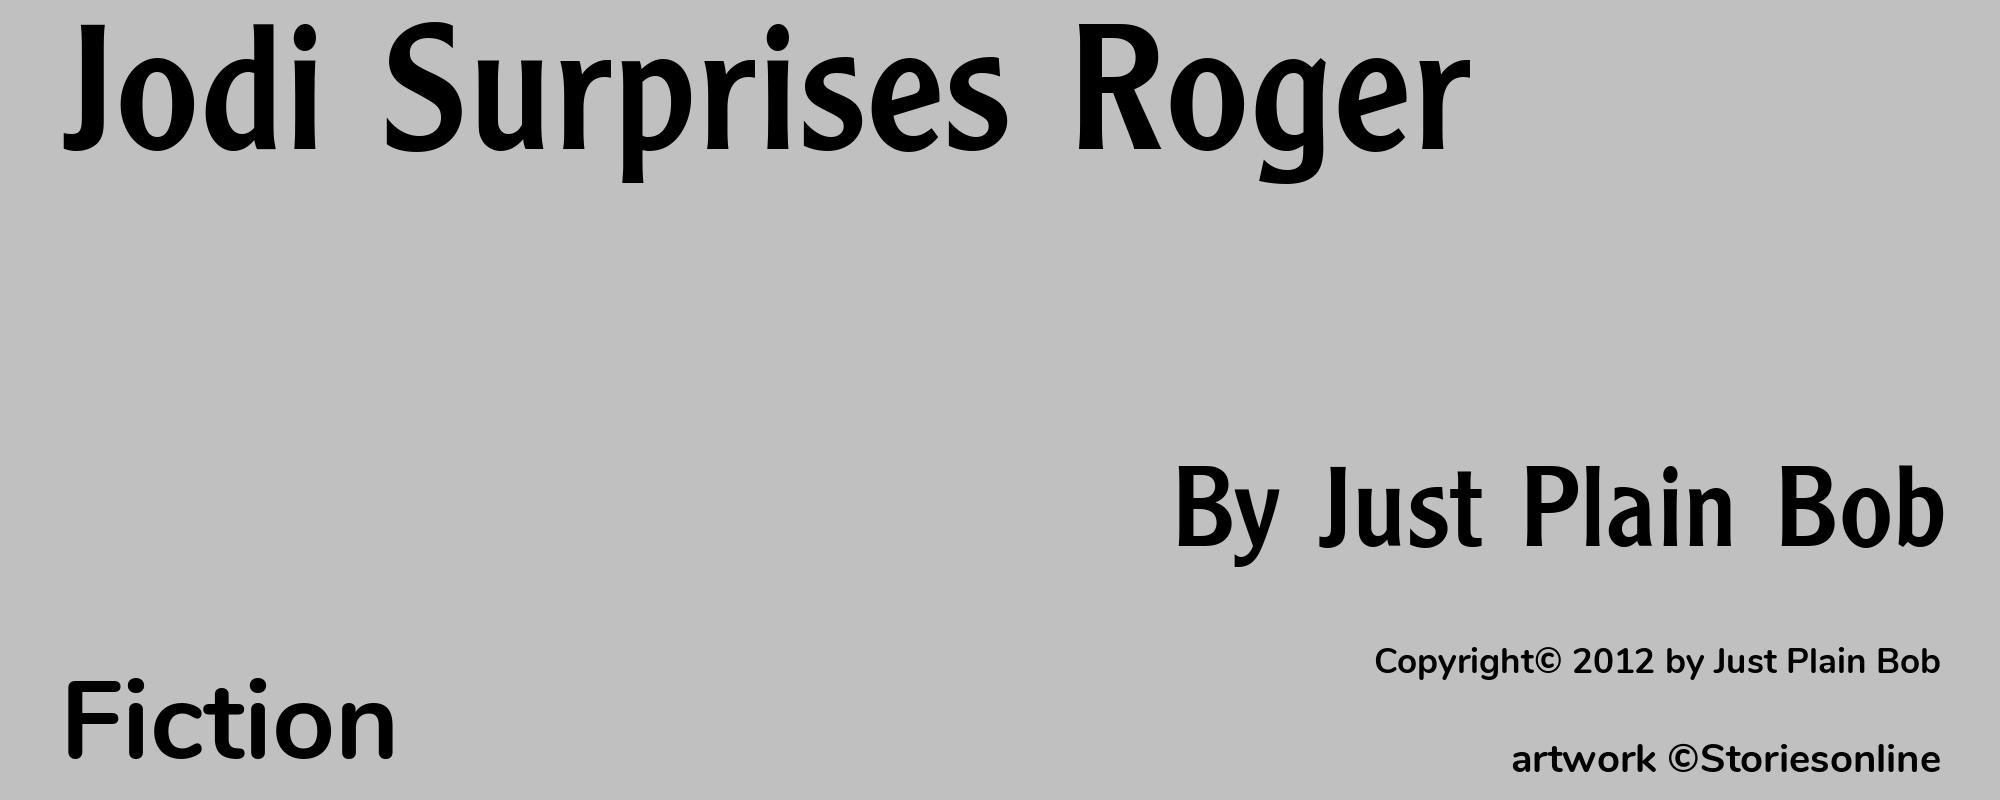 Jodi Surprises Roger - Cover